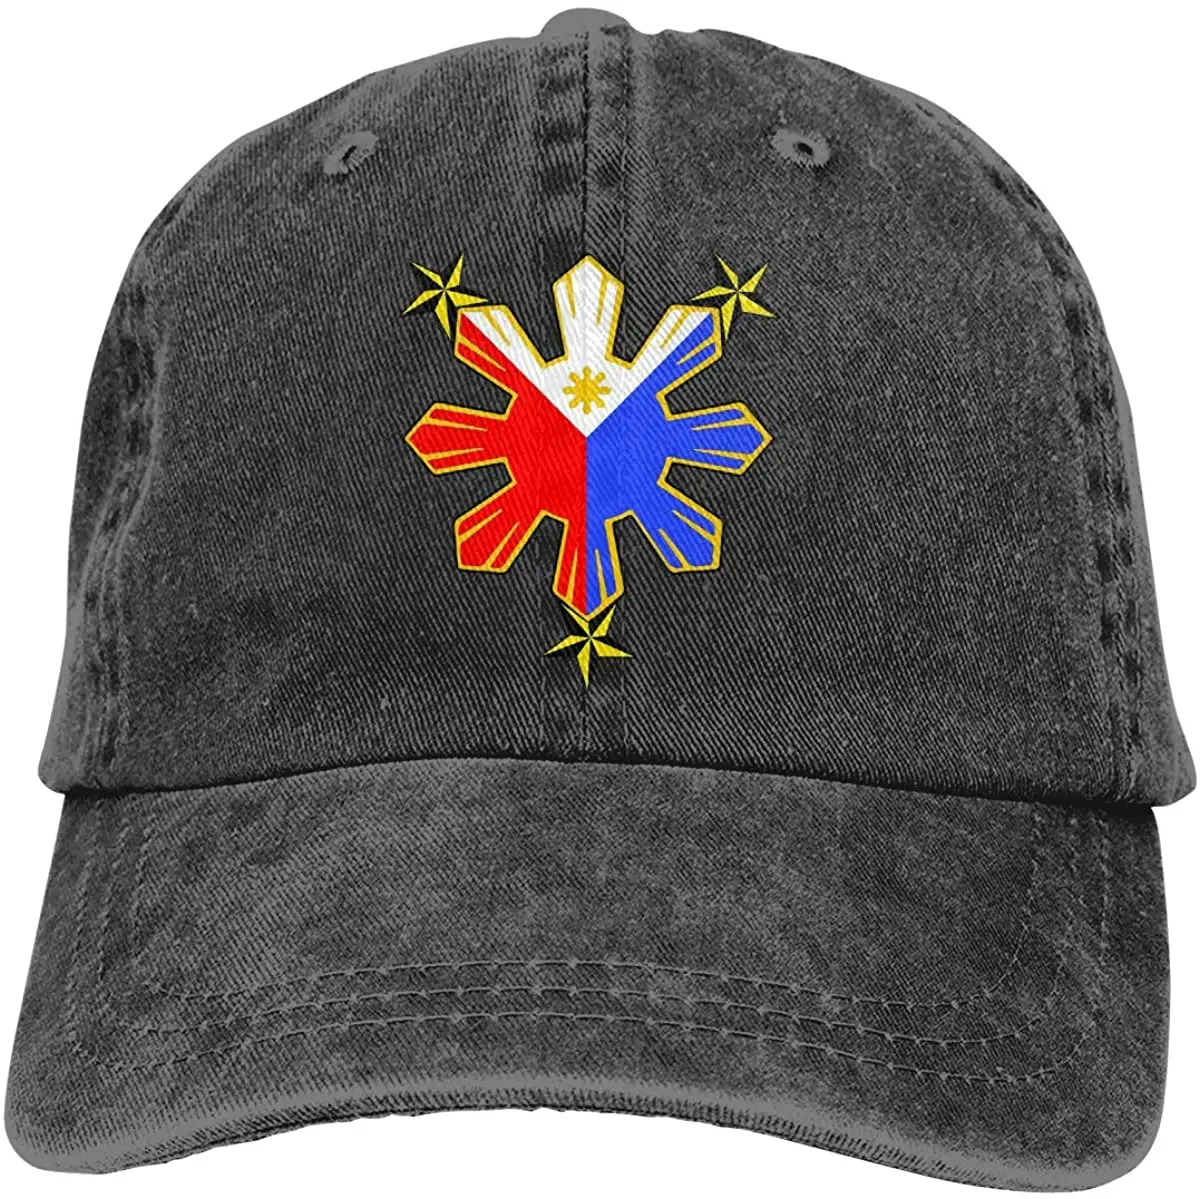 

Pride Pinoy Philippines Unisex Soft Casquette Cap Vintage Adjustable Baseball Caps